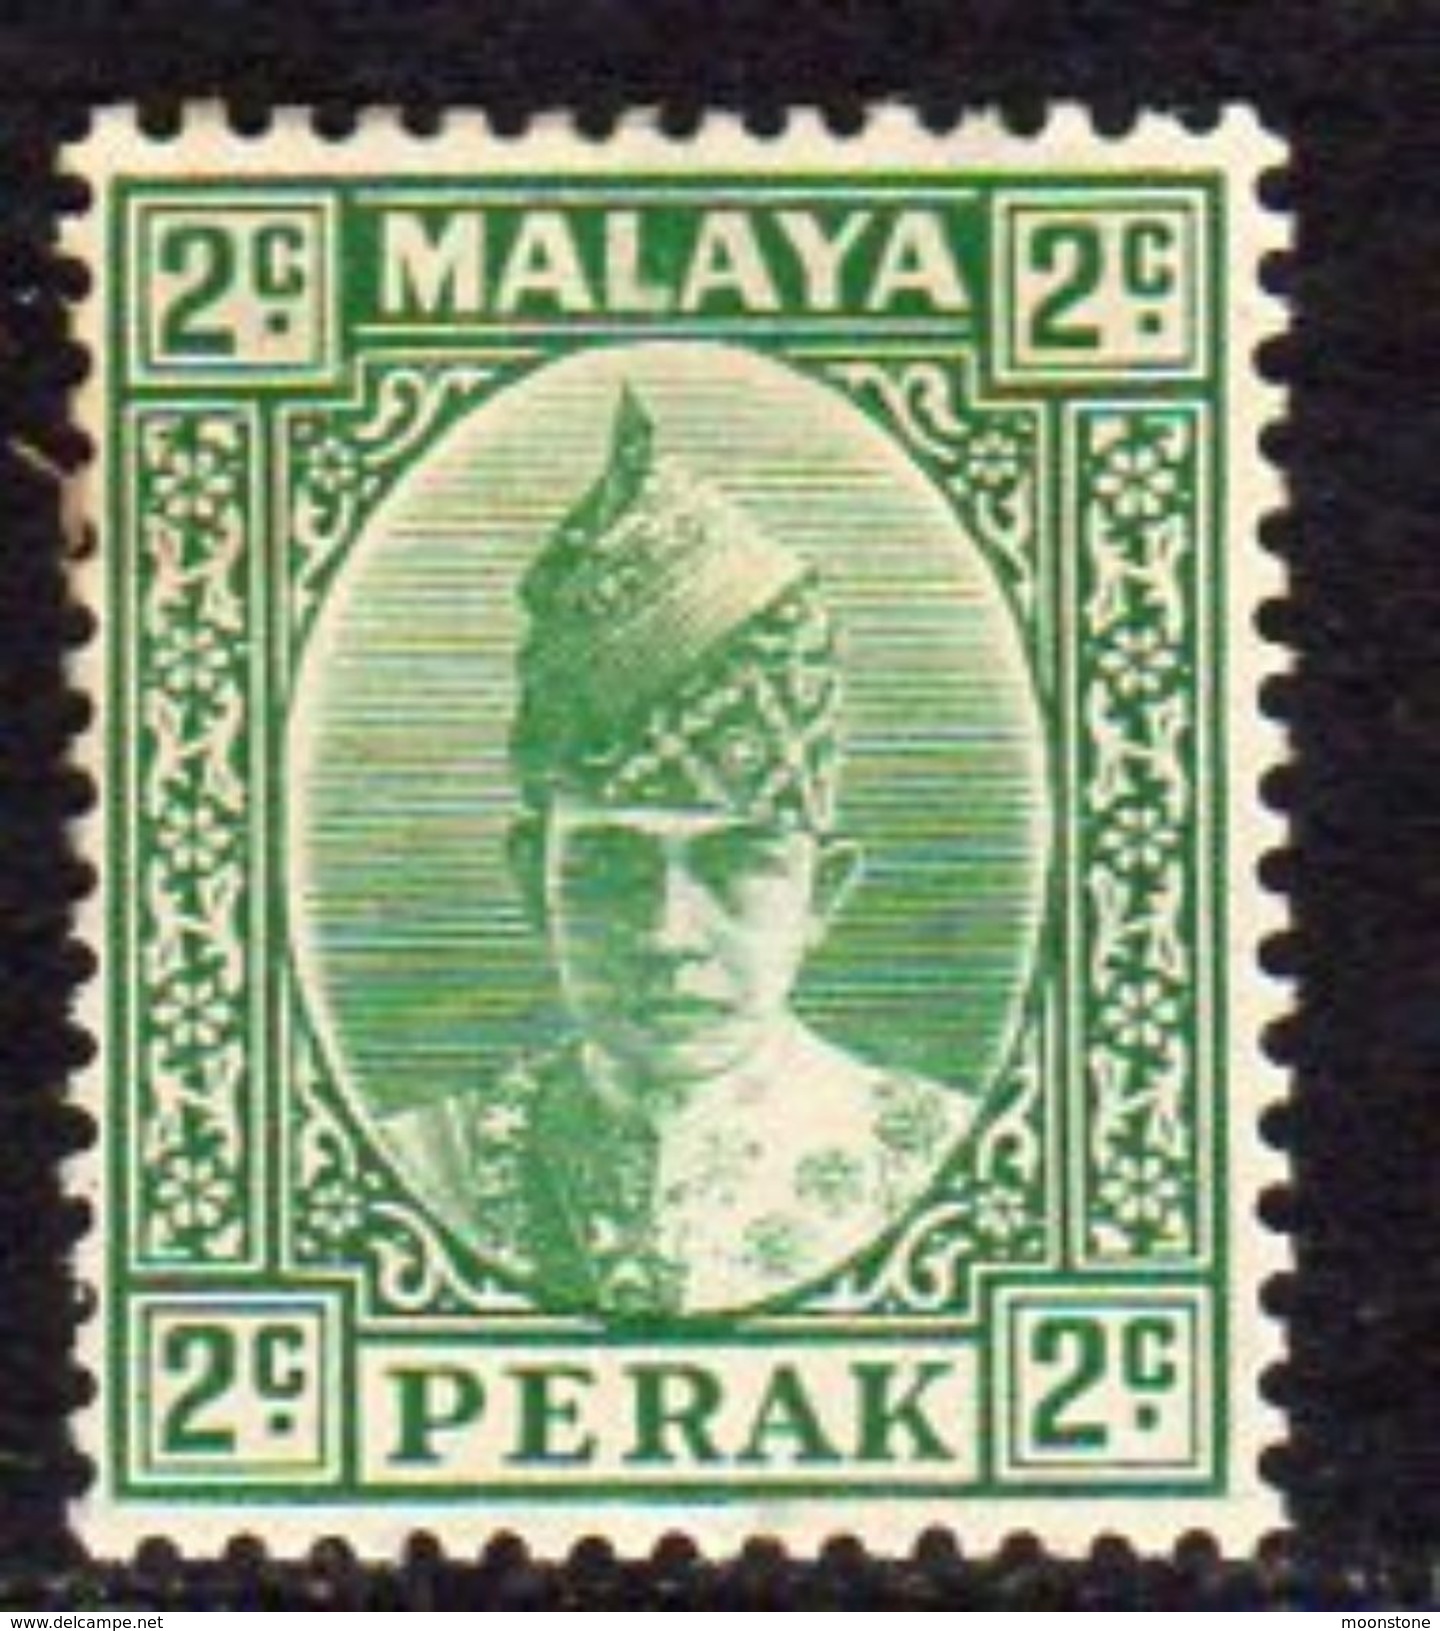 Malaya Perak 1938-41 Sultan Iskandar 2c Green Definitive, Hinged Mint, SG 104 - Perak